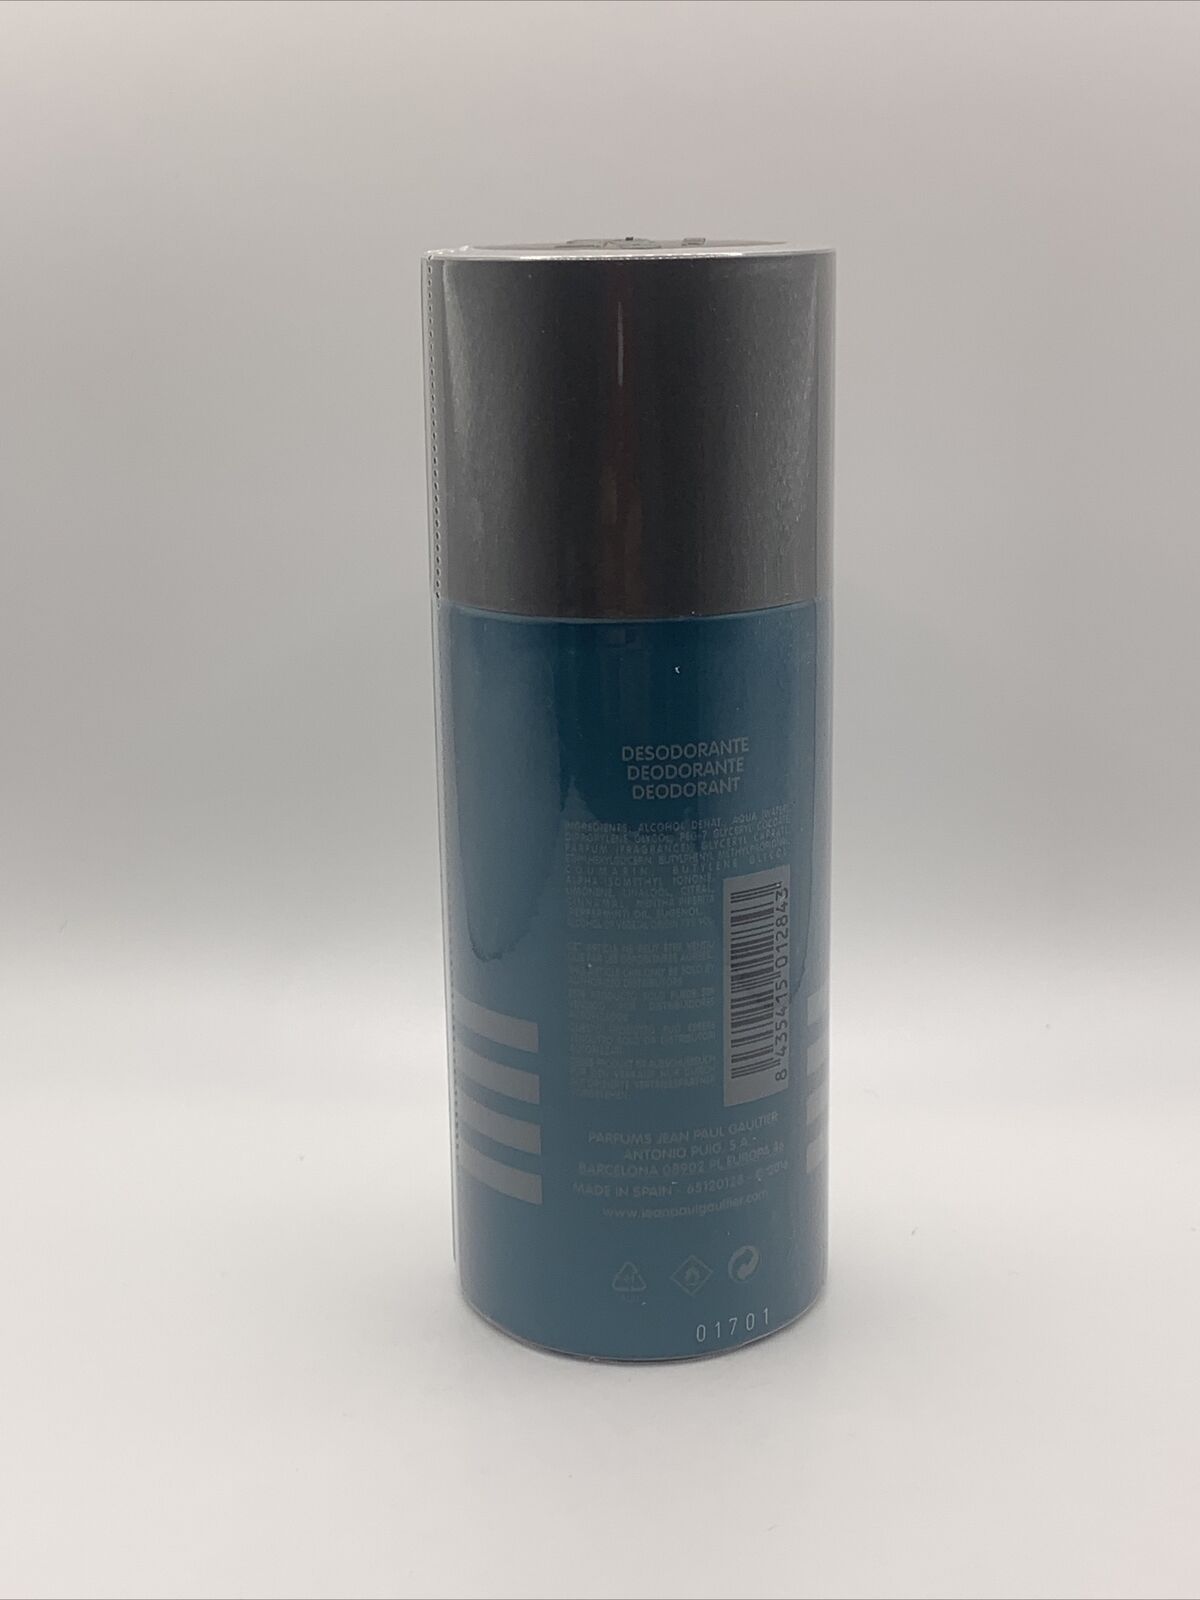 vraag naar Superioriteit Gemengd Jean Paul Gaultier Le Male Deodorant Spray 5.1 Ounces For Men (Sealed)  8435415012843 | eBay